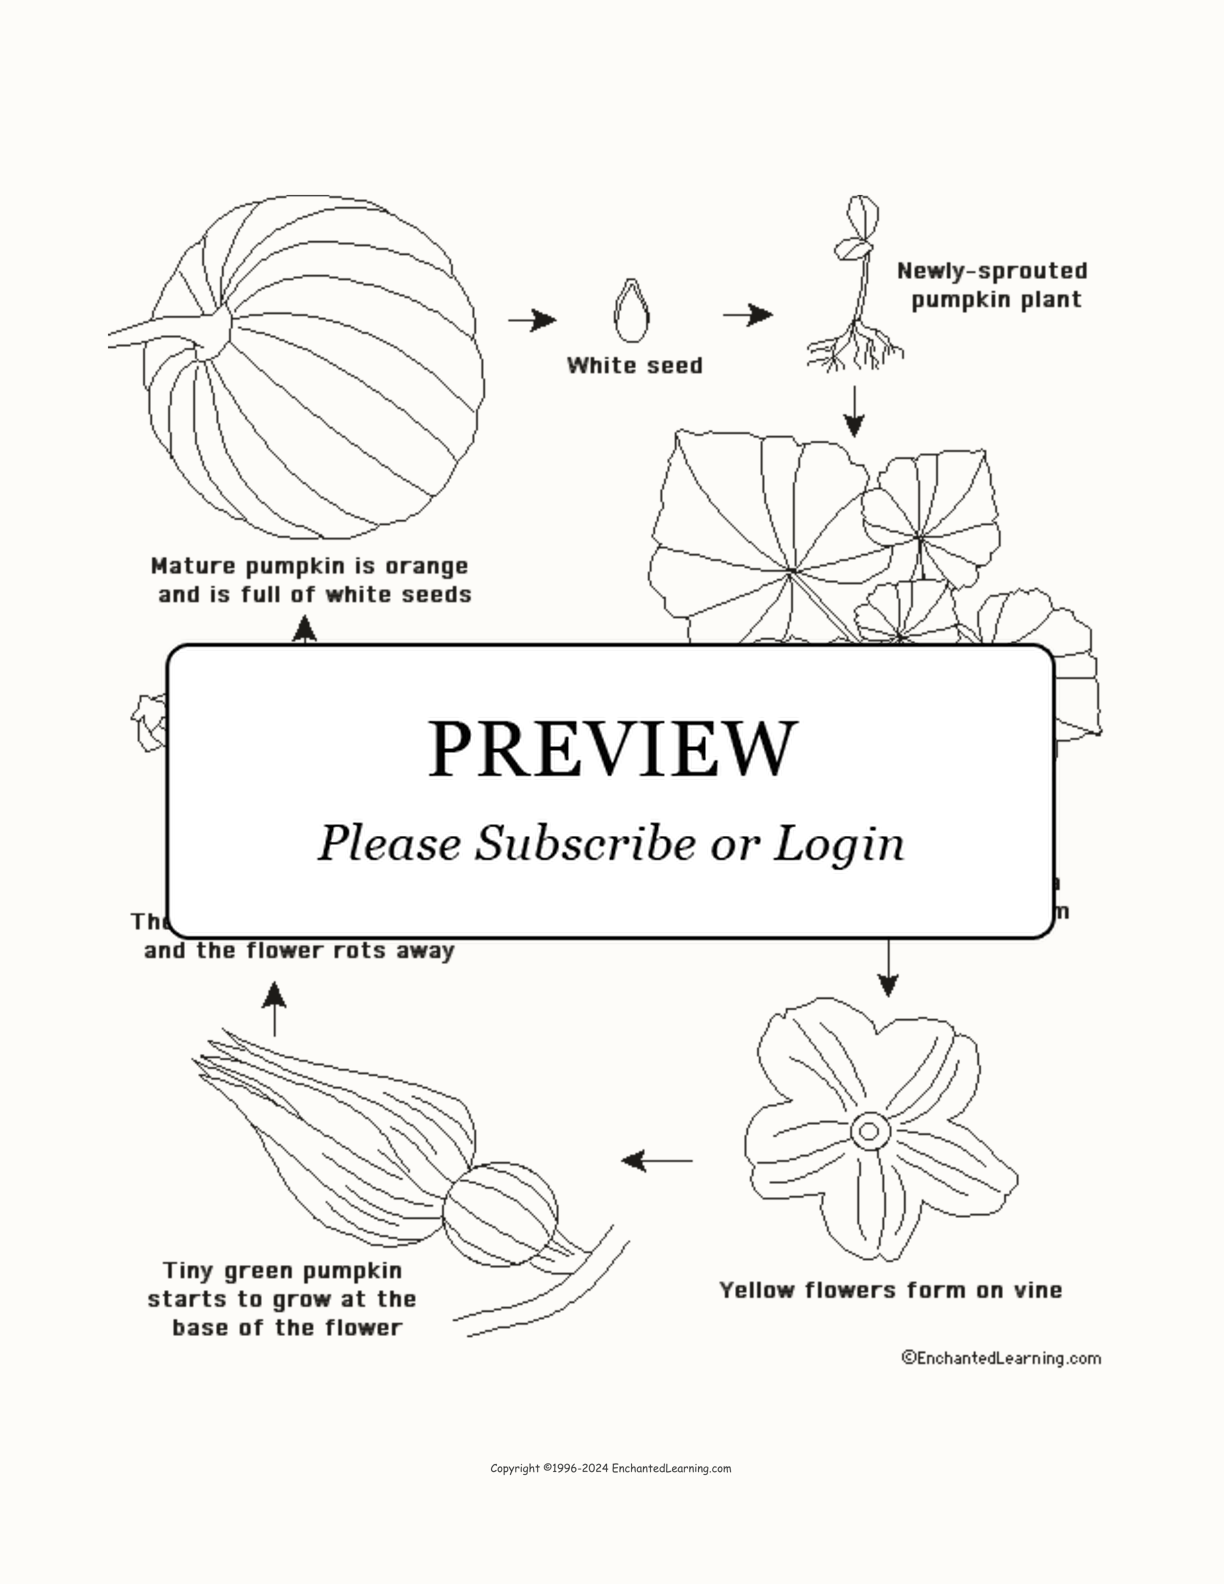 Pumpkin Life Cycle interactive printout page 1